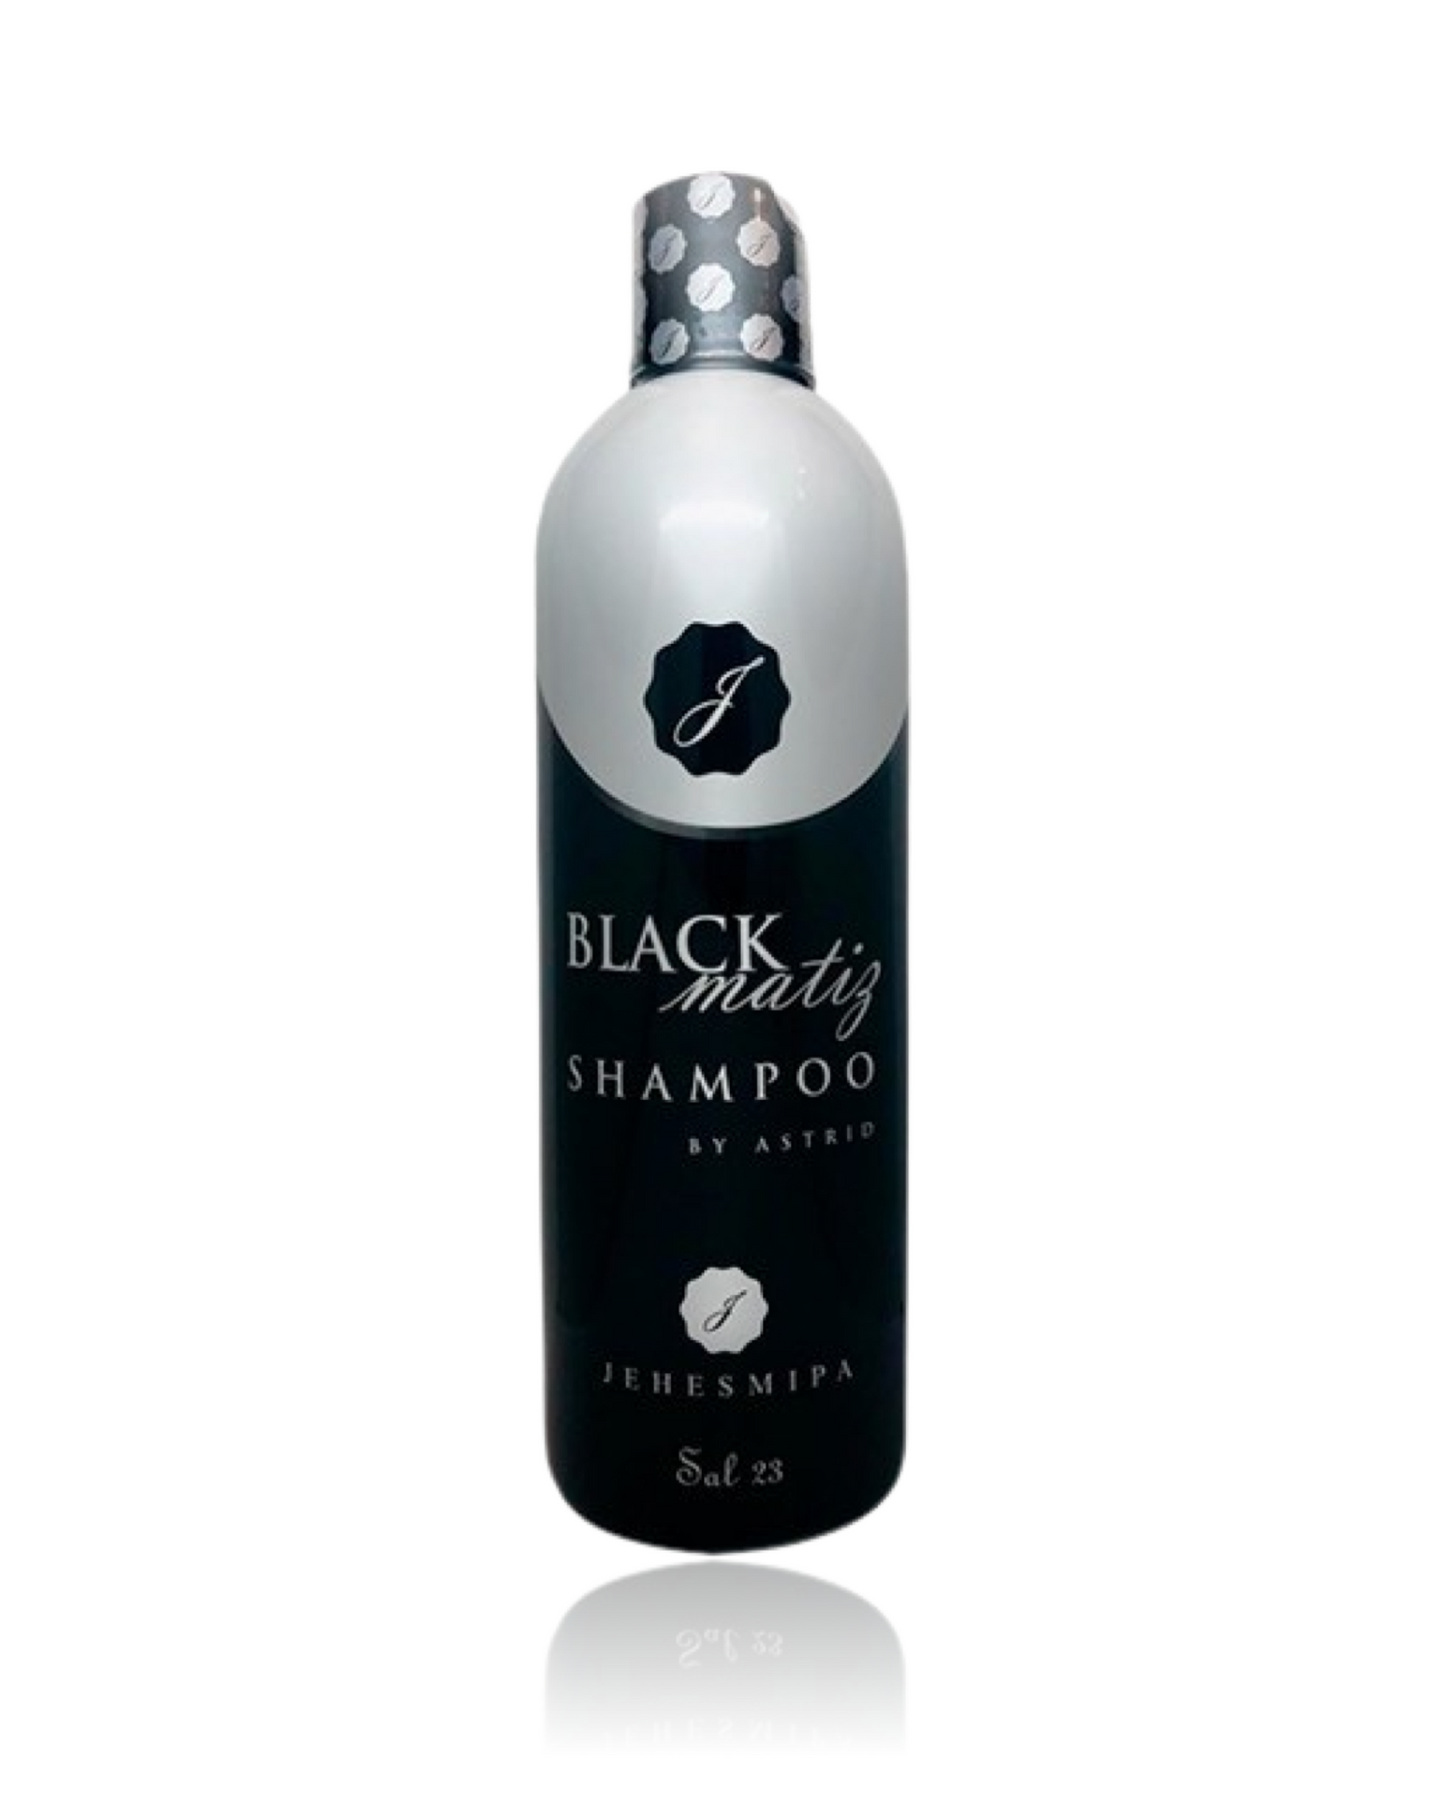 Black Matriz Shampoo de Jehesmipa